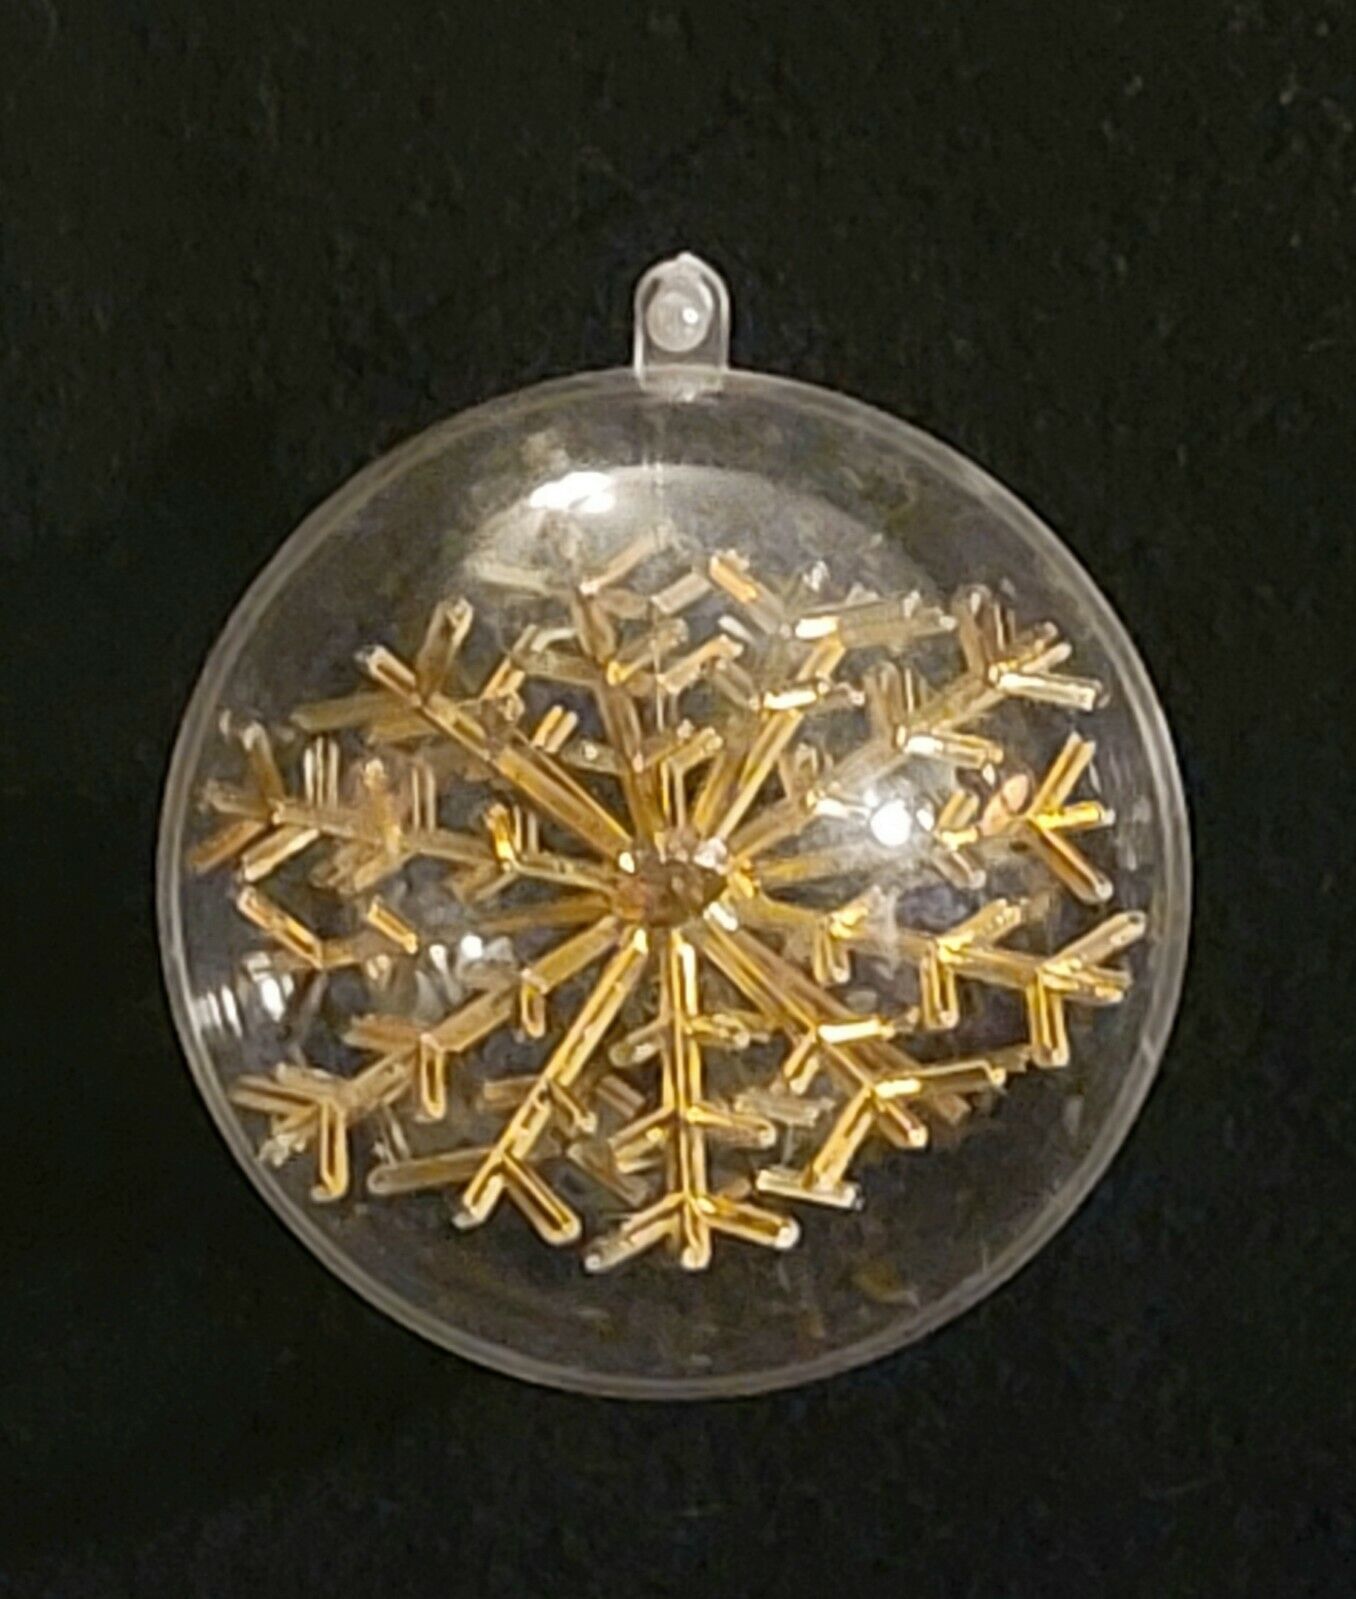 Rare Vintage Acrylic Christmas Ball Ornament With 3D Rotating Gold Snowflake